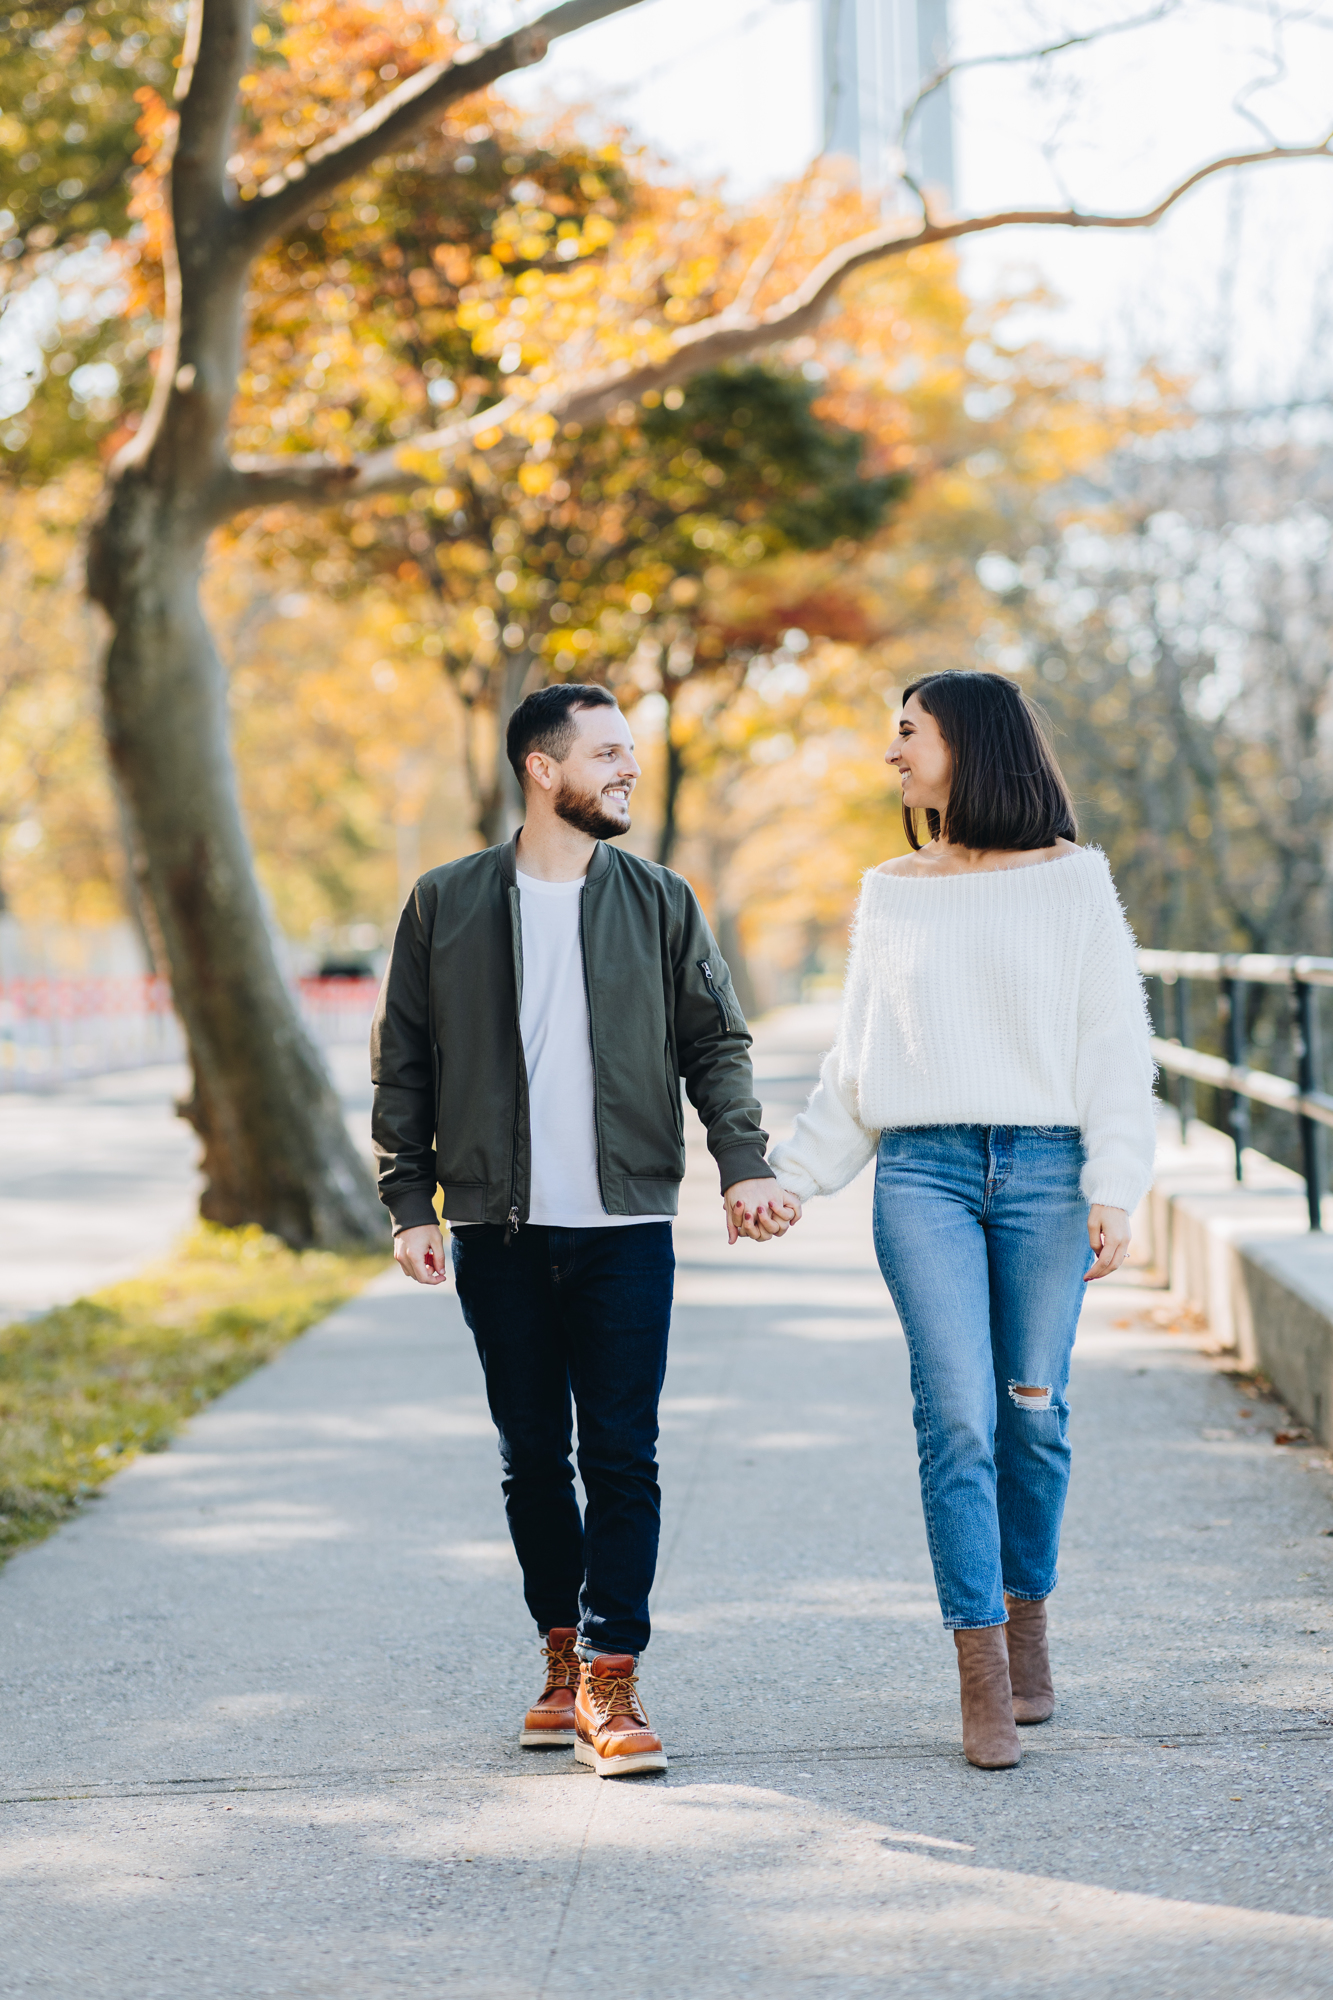 Romantic Fall Engagement Photos in Astoria Park, Queens, New York